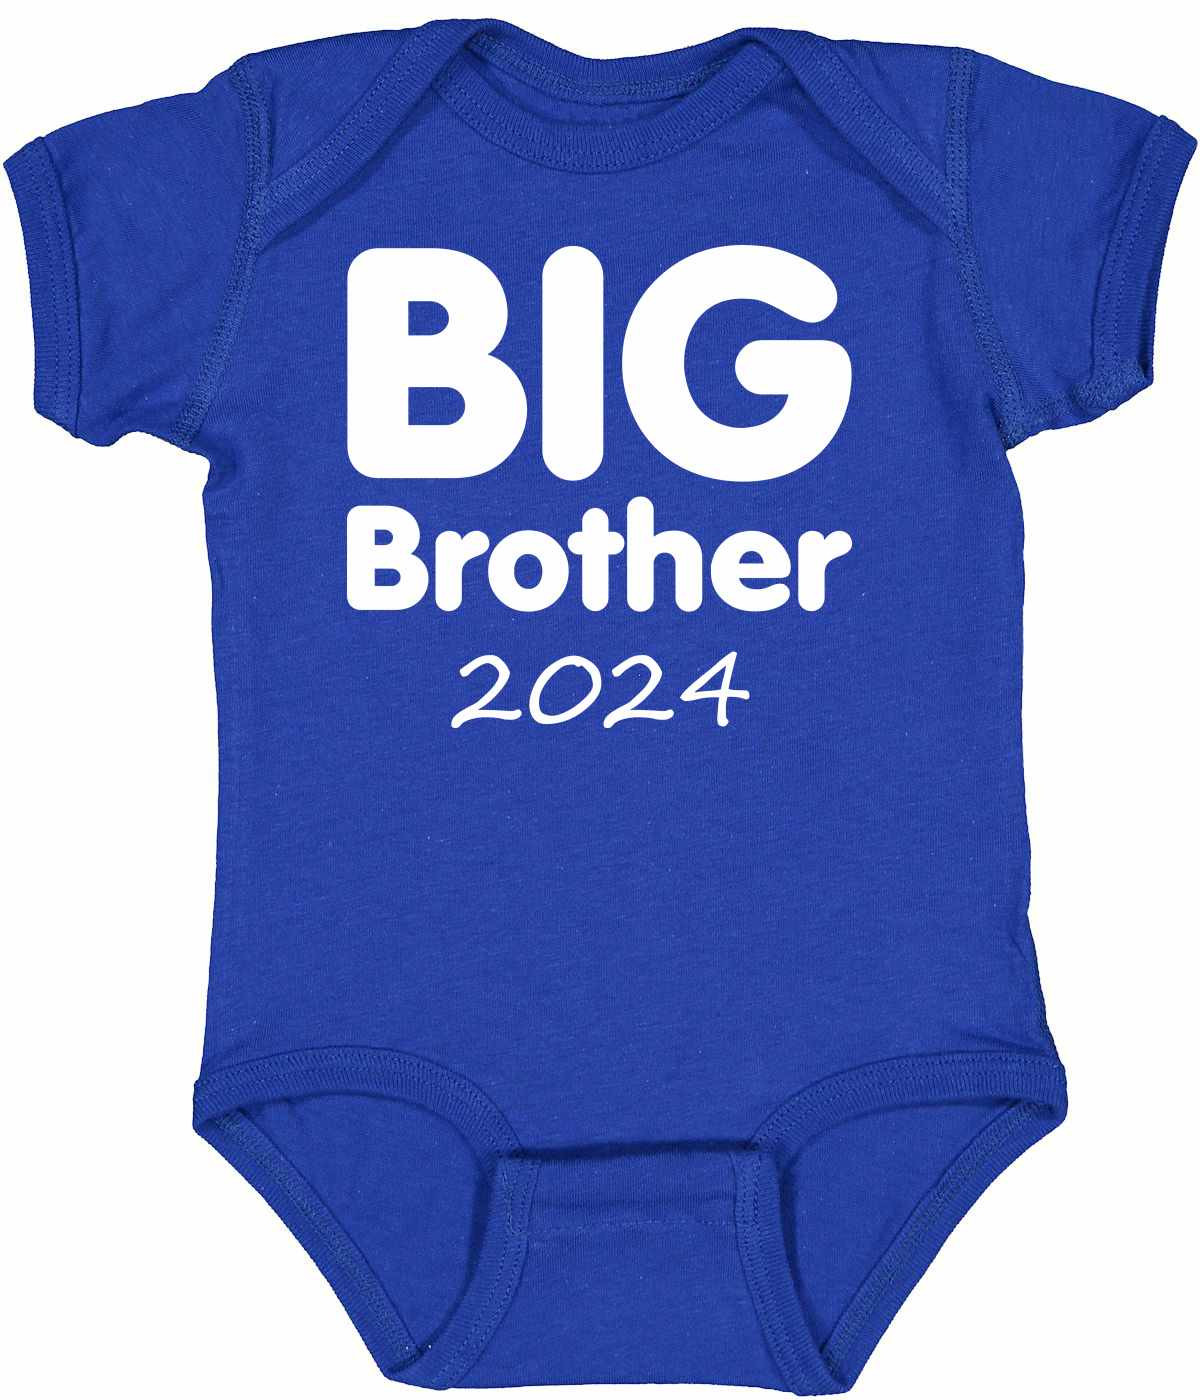 Big Brother 2024 on Infant BodySuit (#1368-10)